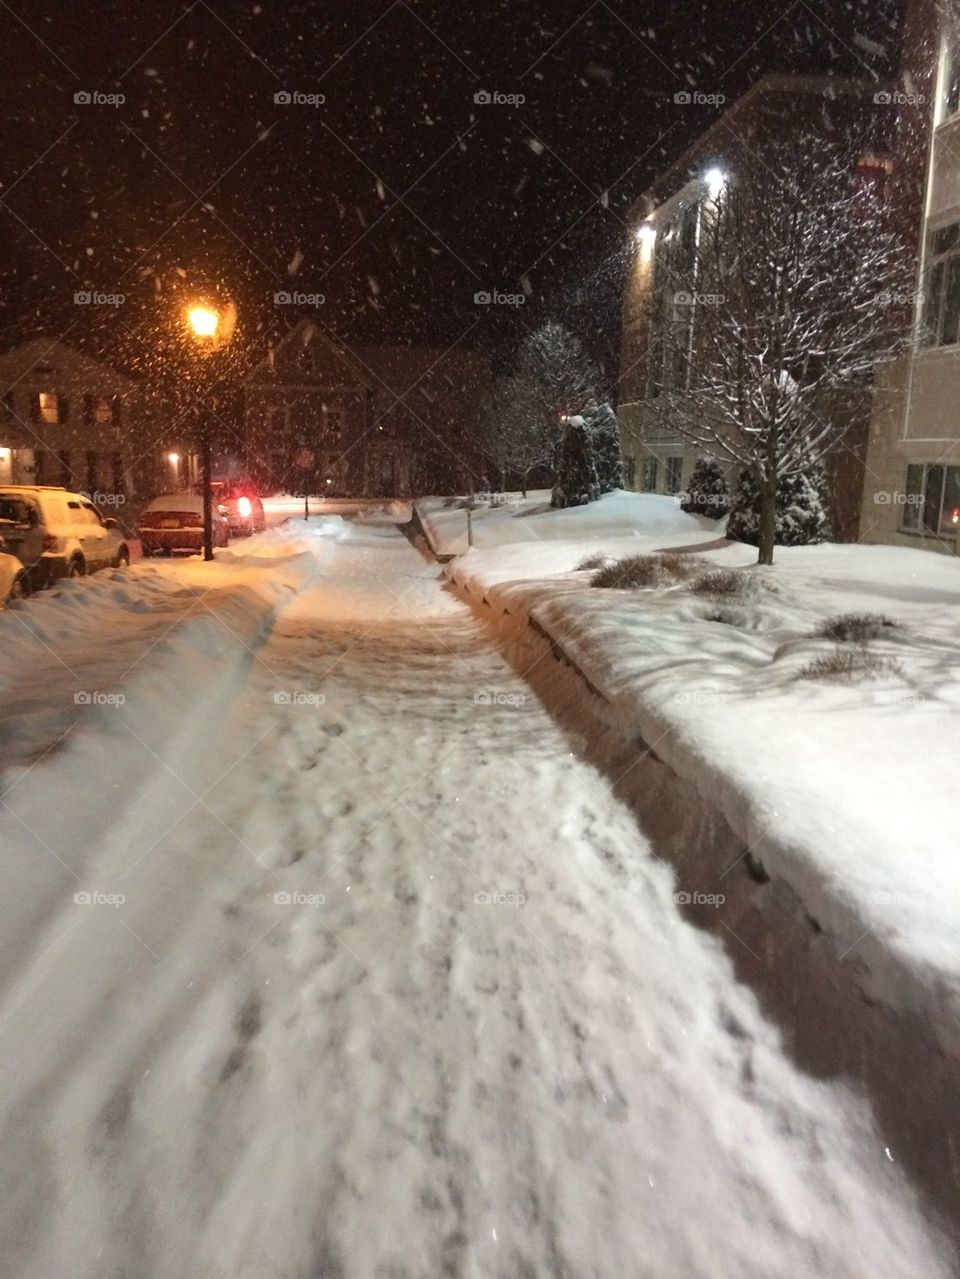 Winter in upstate NY